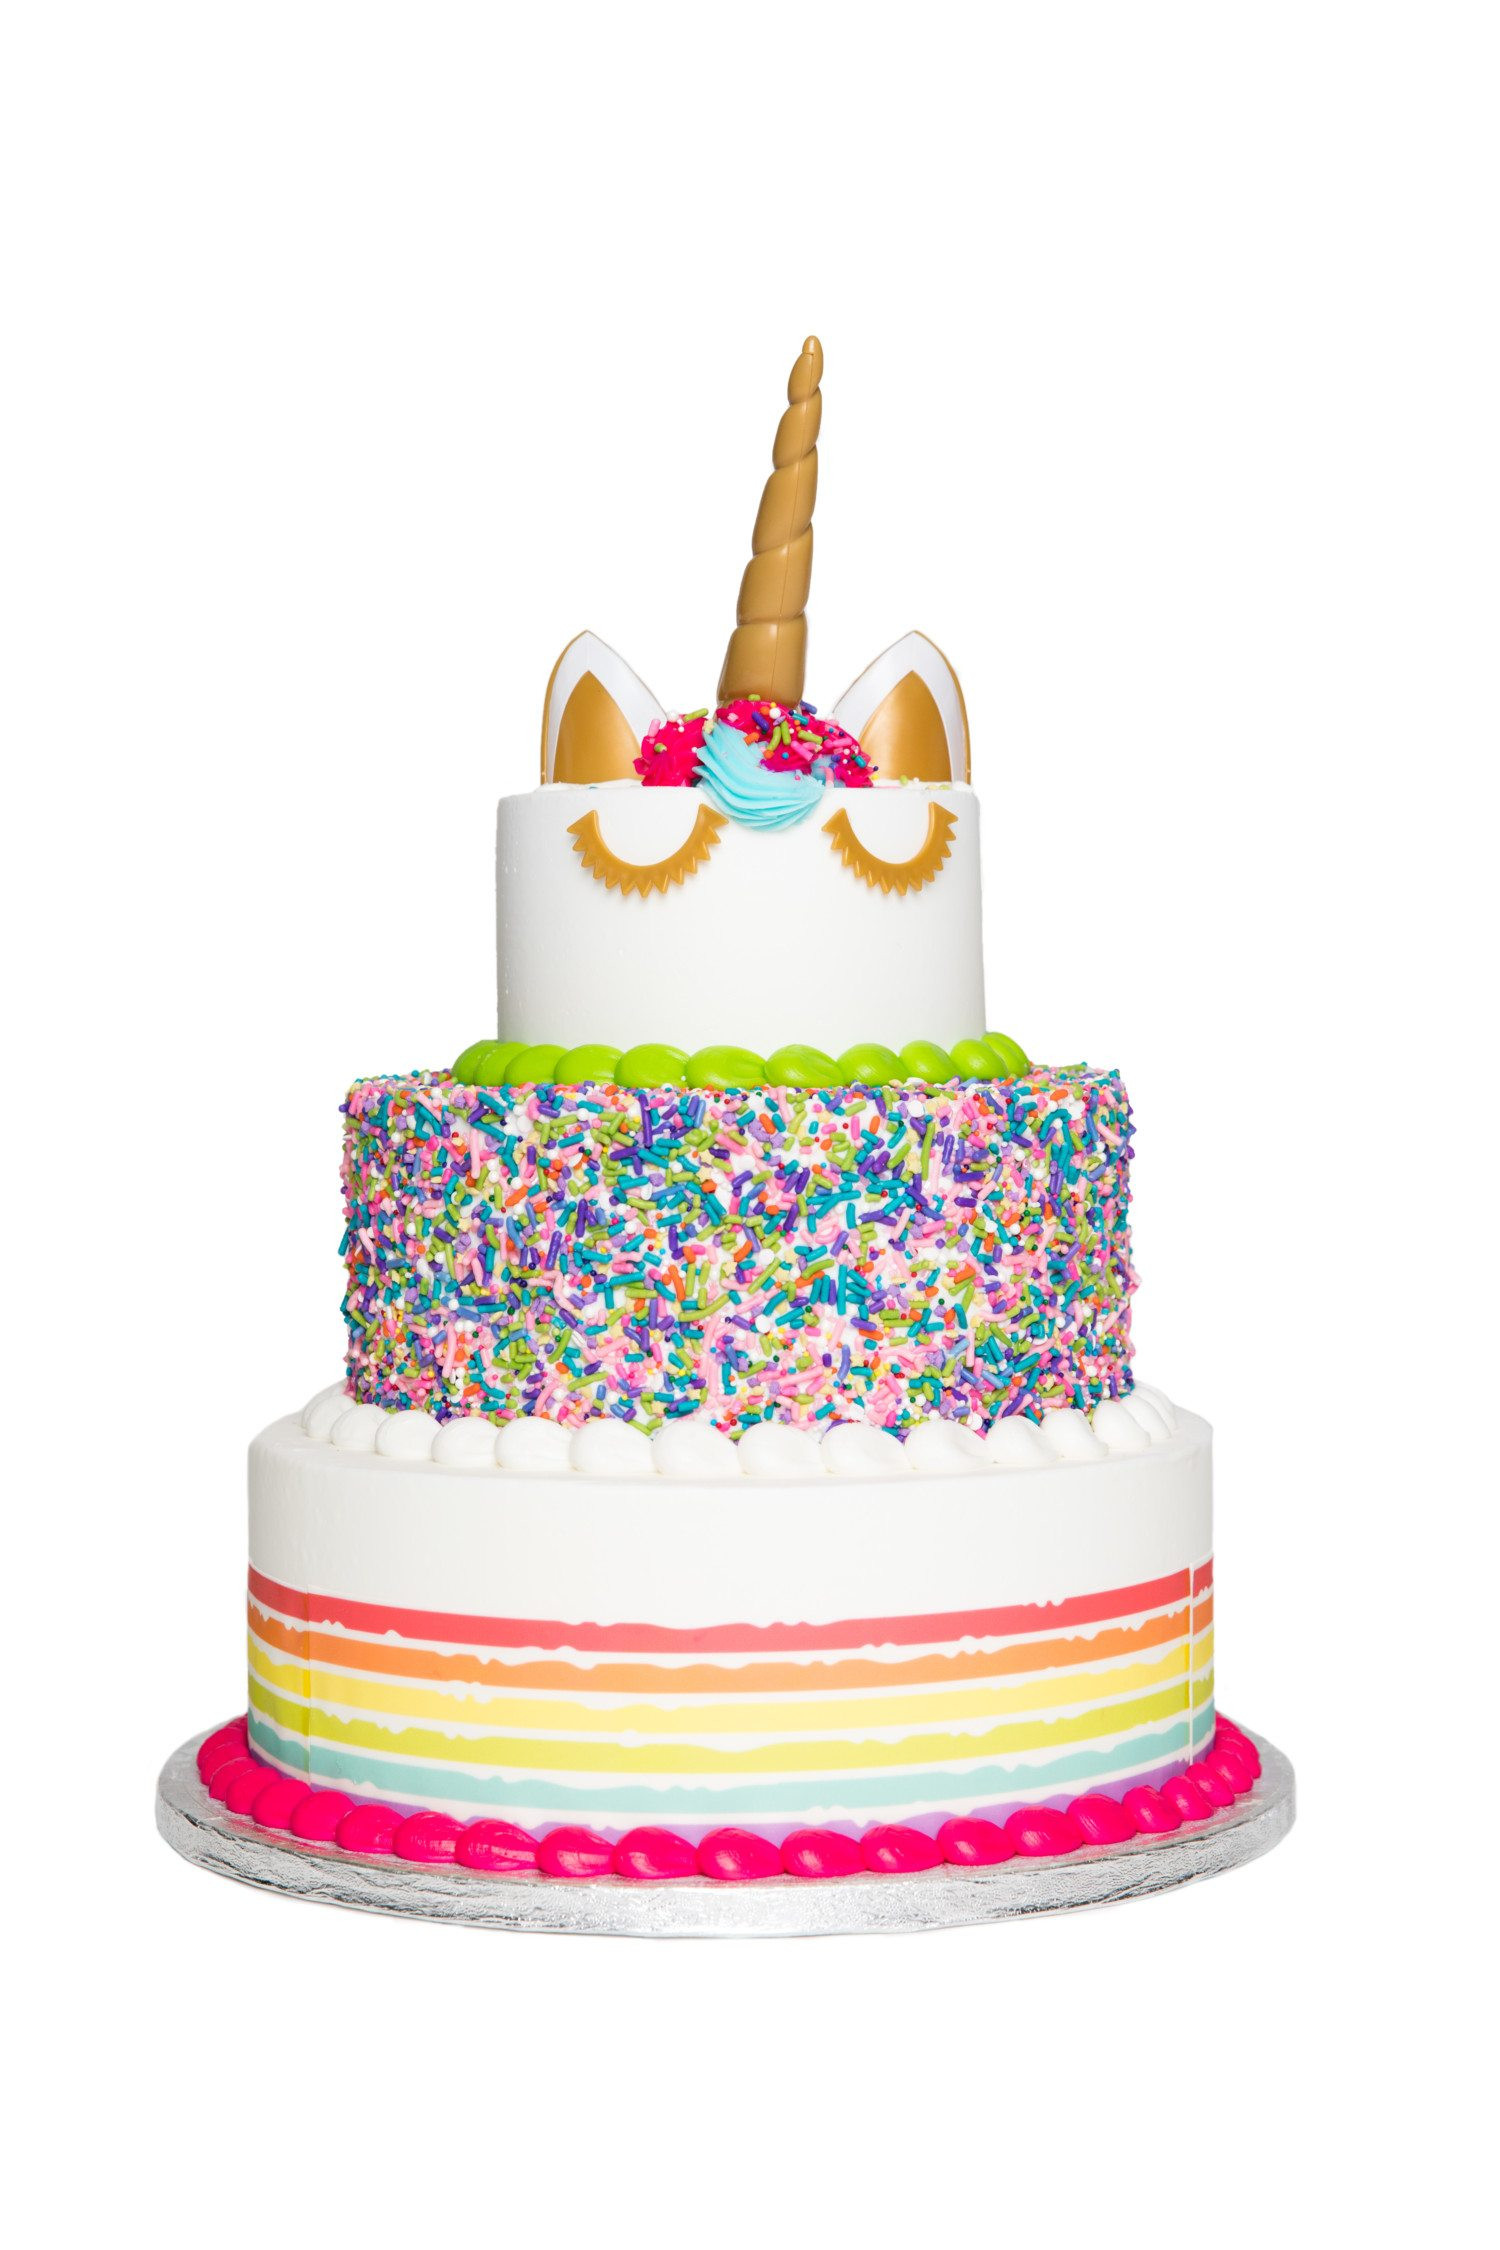 Birthday Cakes At Sams Club
 Giant Unicorn Cake From Sam s Club Simplemost